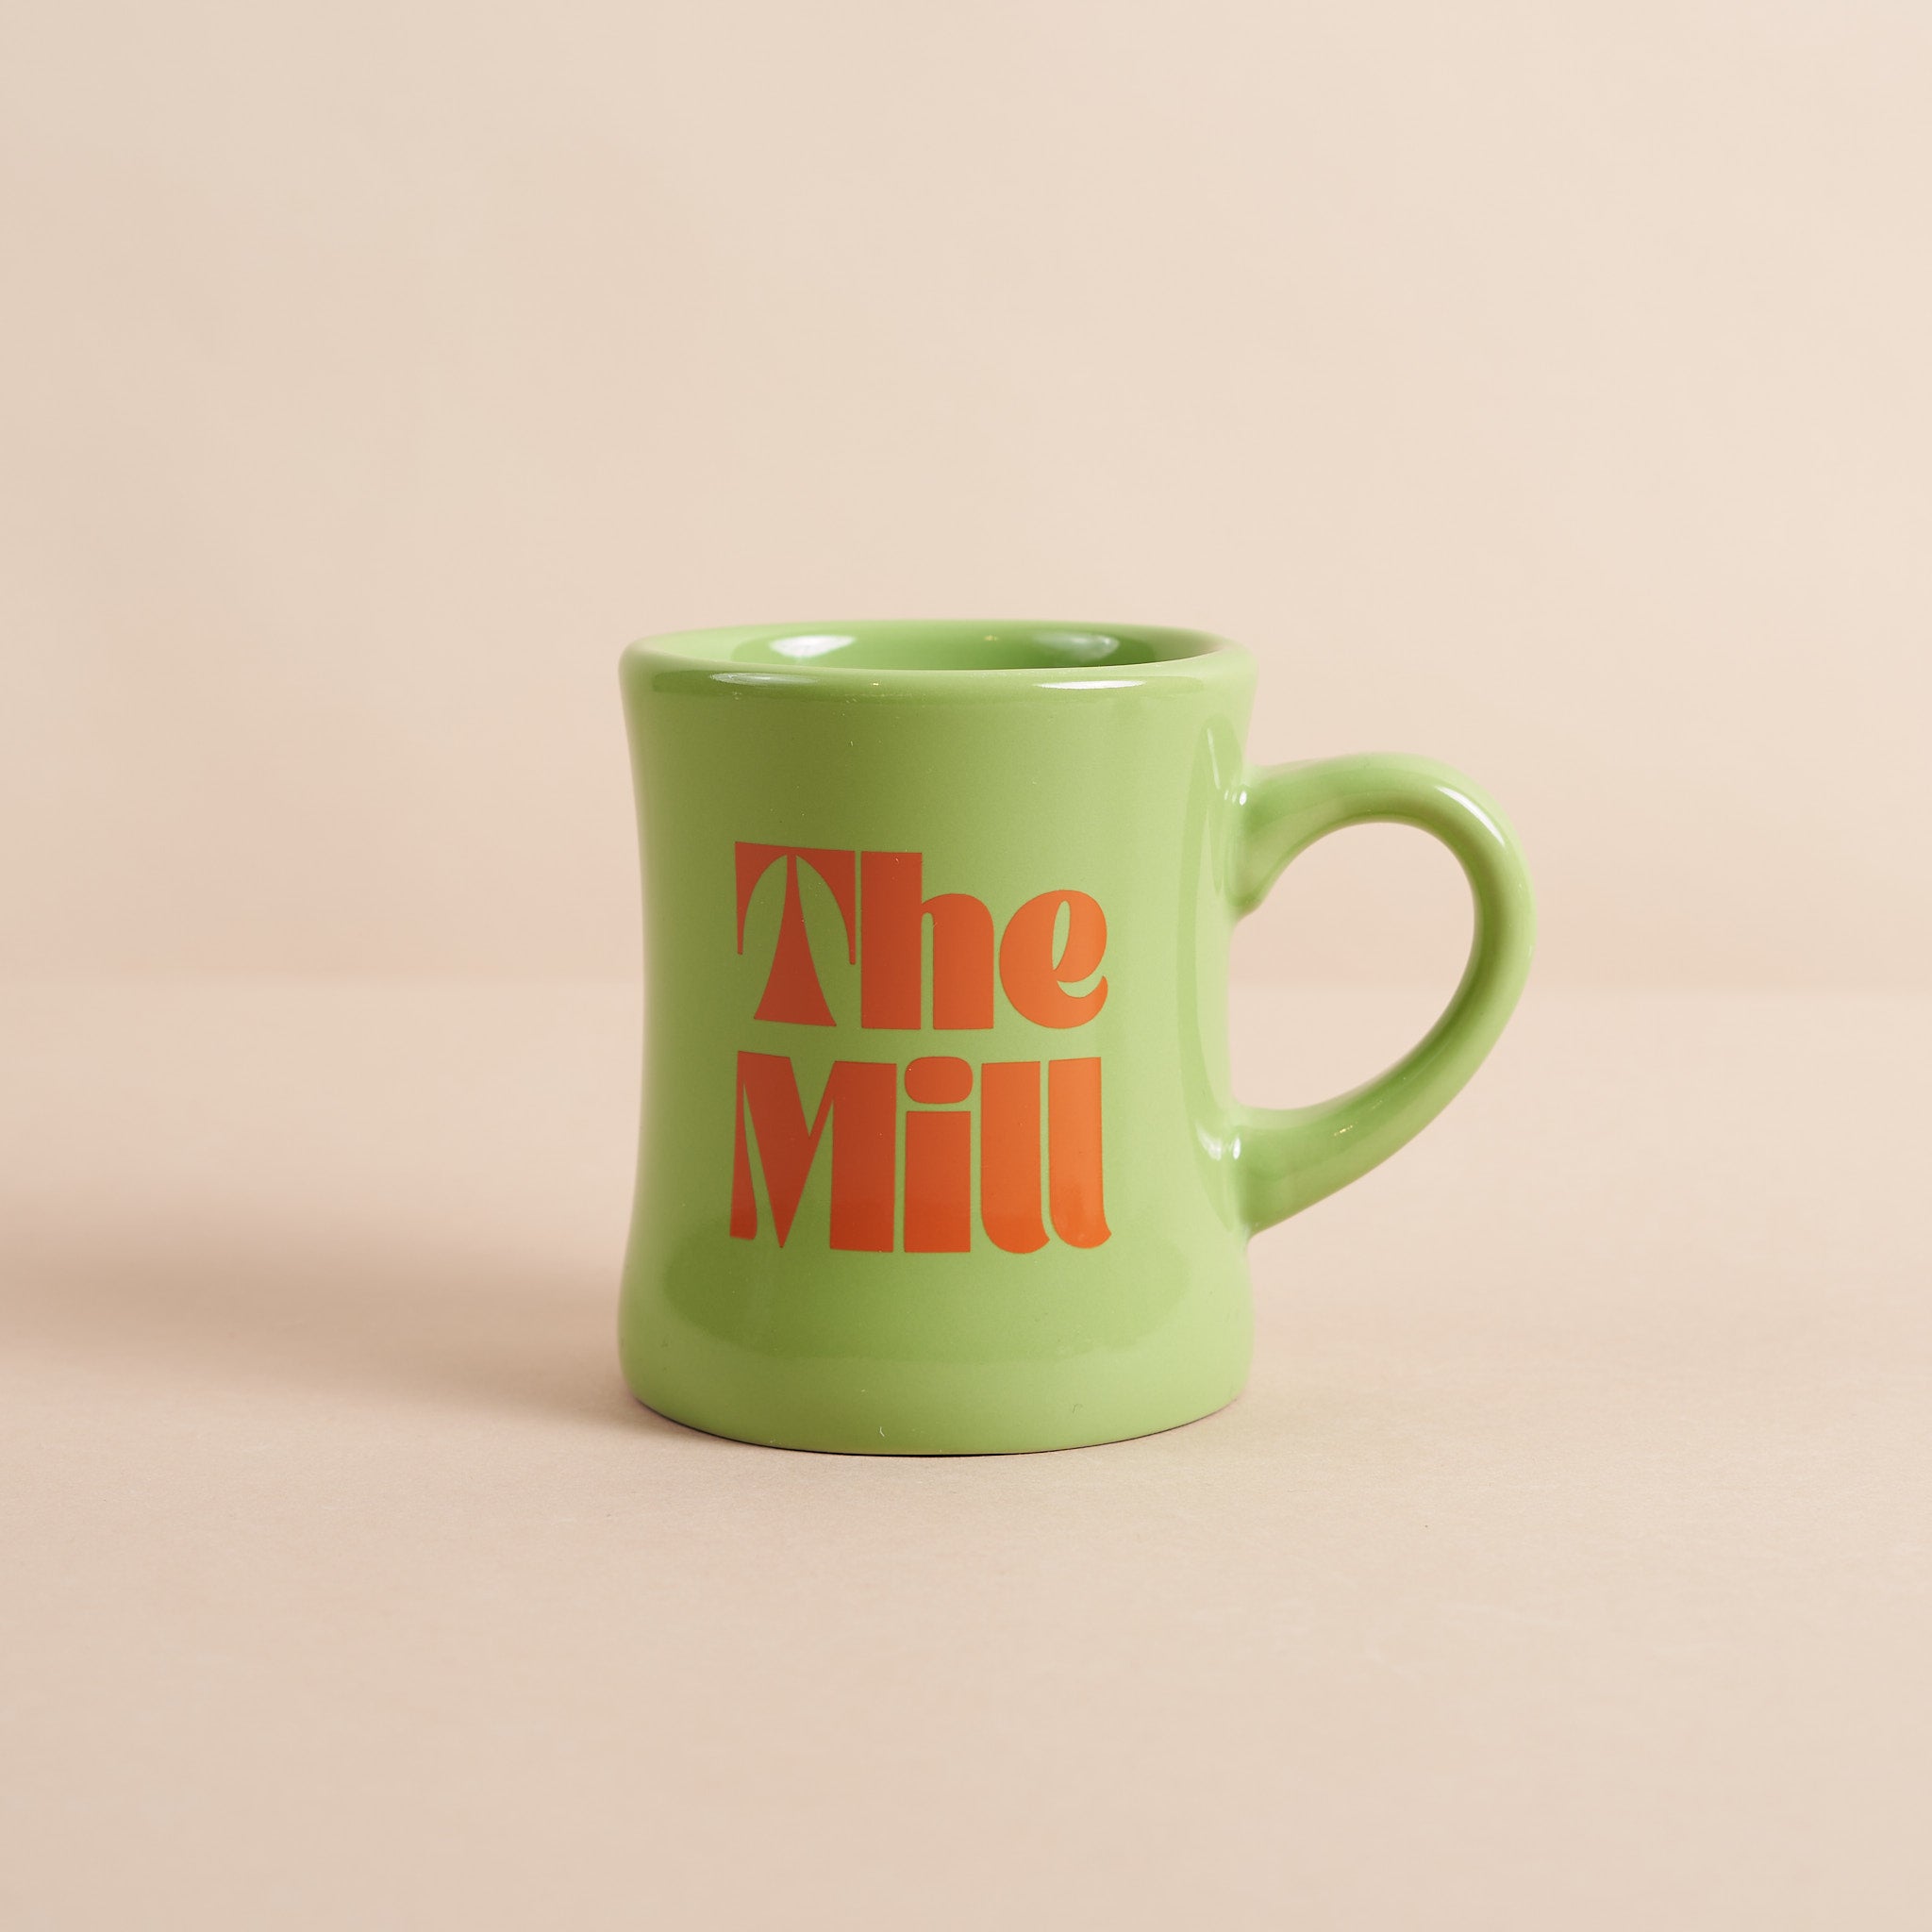 Color Cafe Mill Mug with Surf Logo